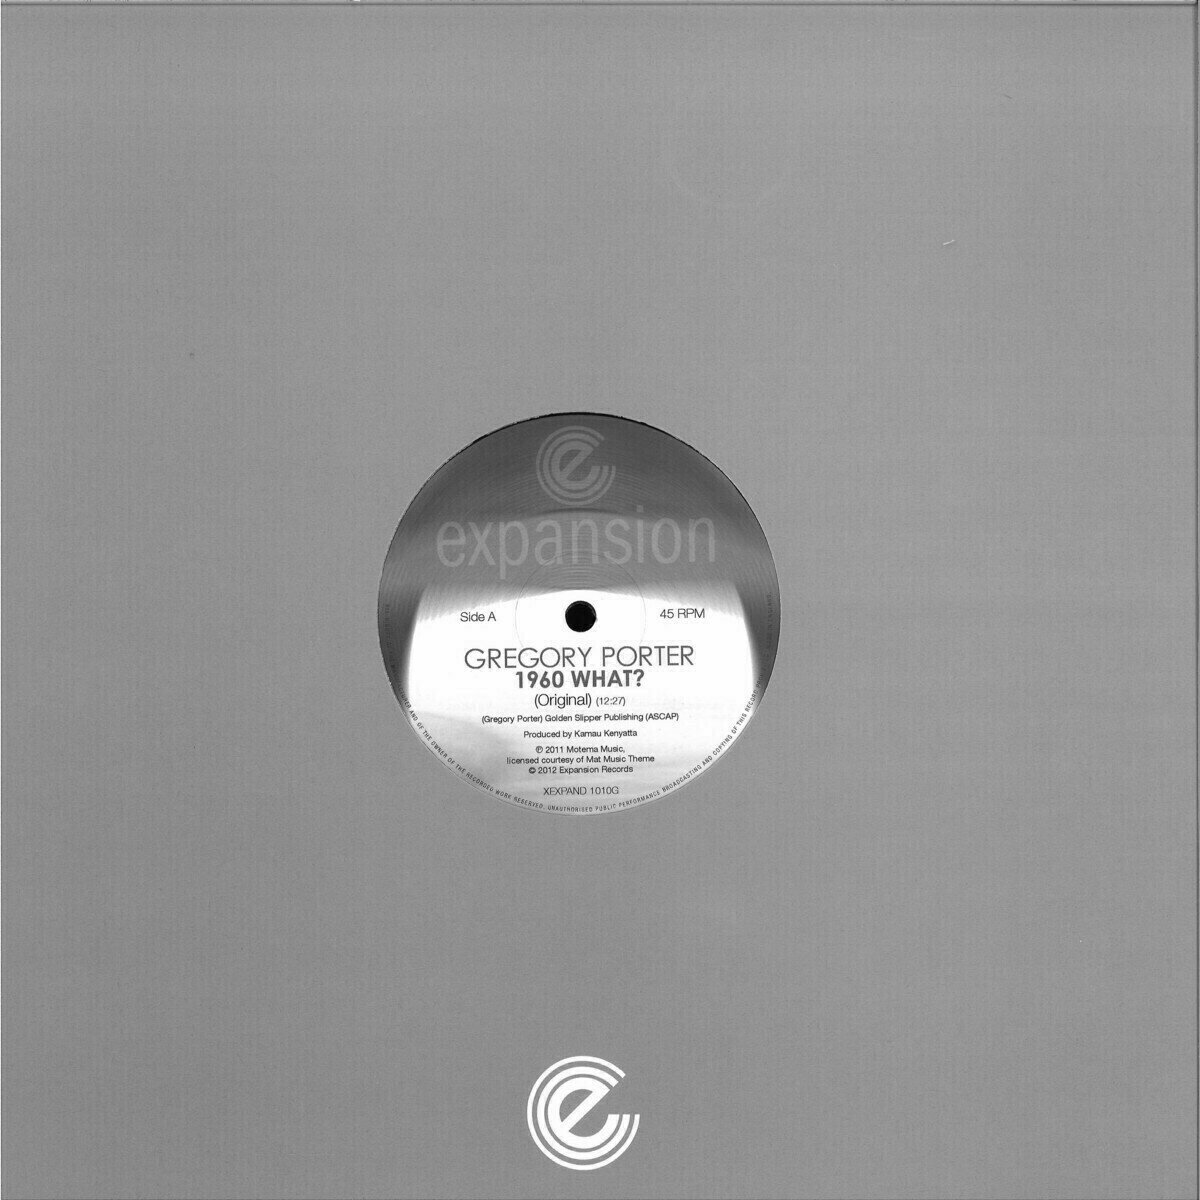 Vinyl Record Gregory Porter - 1960 What? (Original Mix) (12" Vinyl)